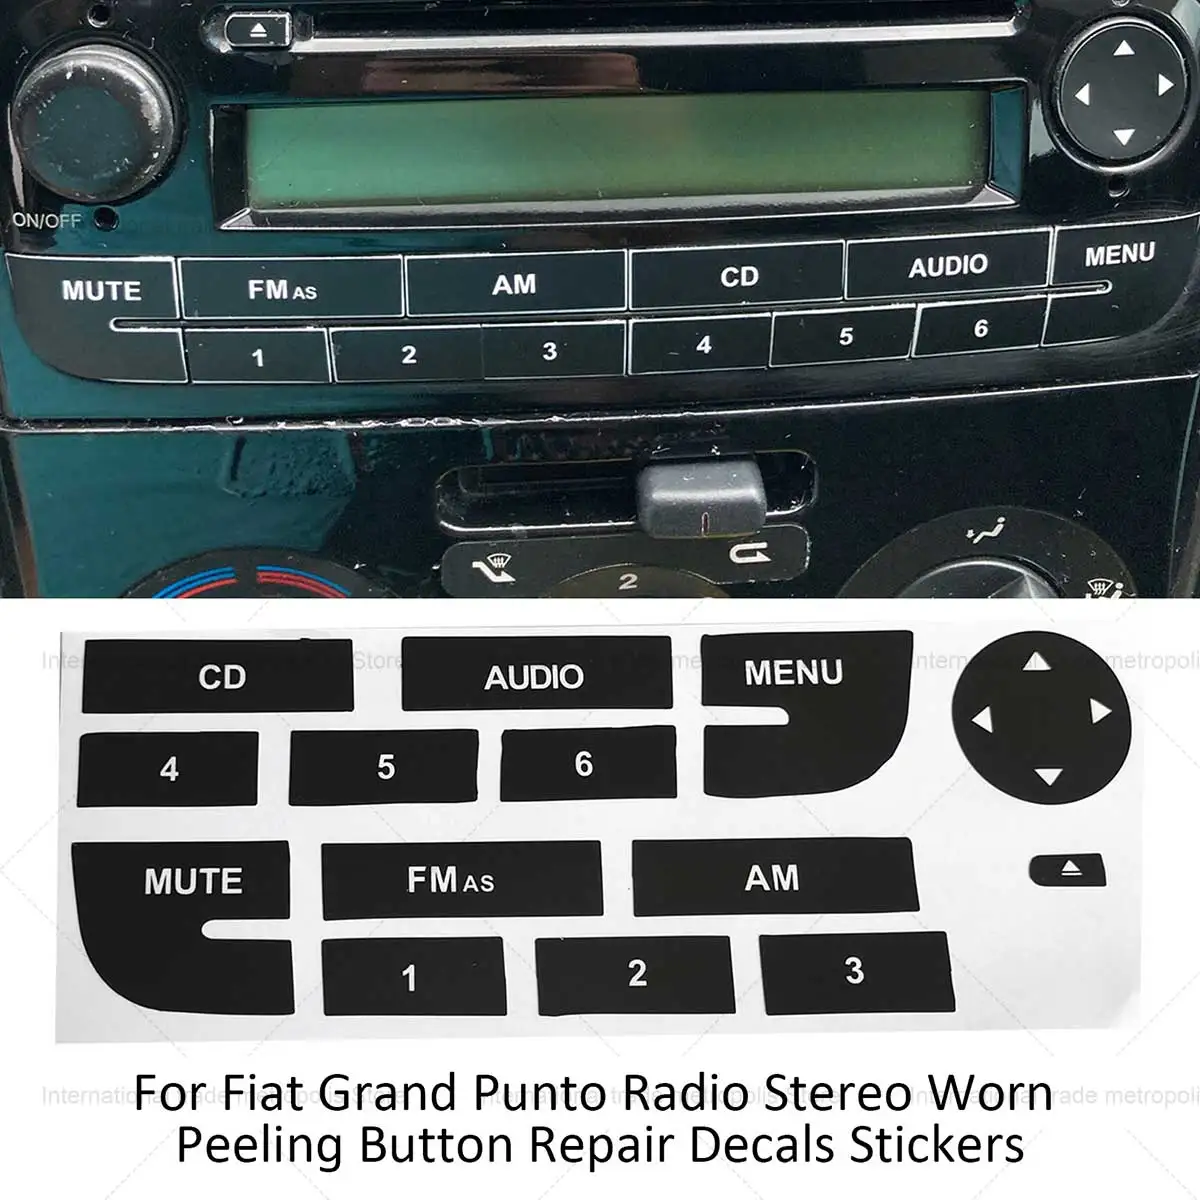 Fiat Grande Punto ADESIVI resinati decal sticker tastiera menu